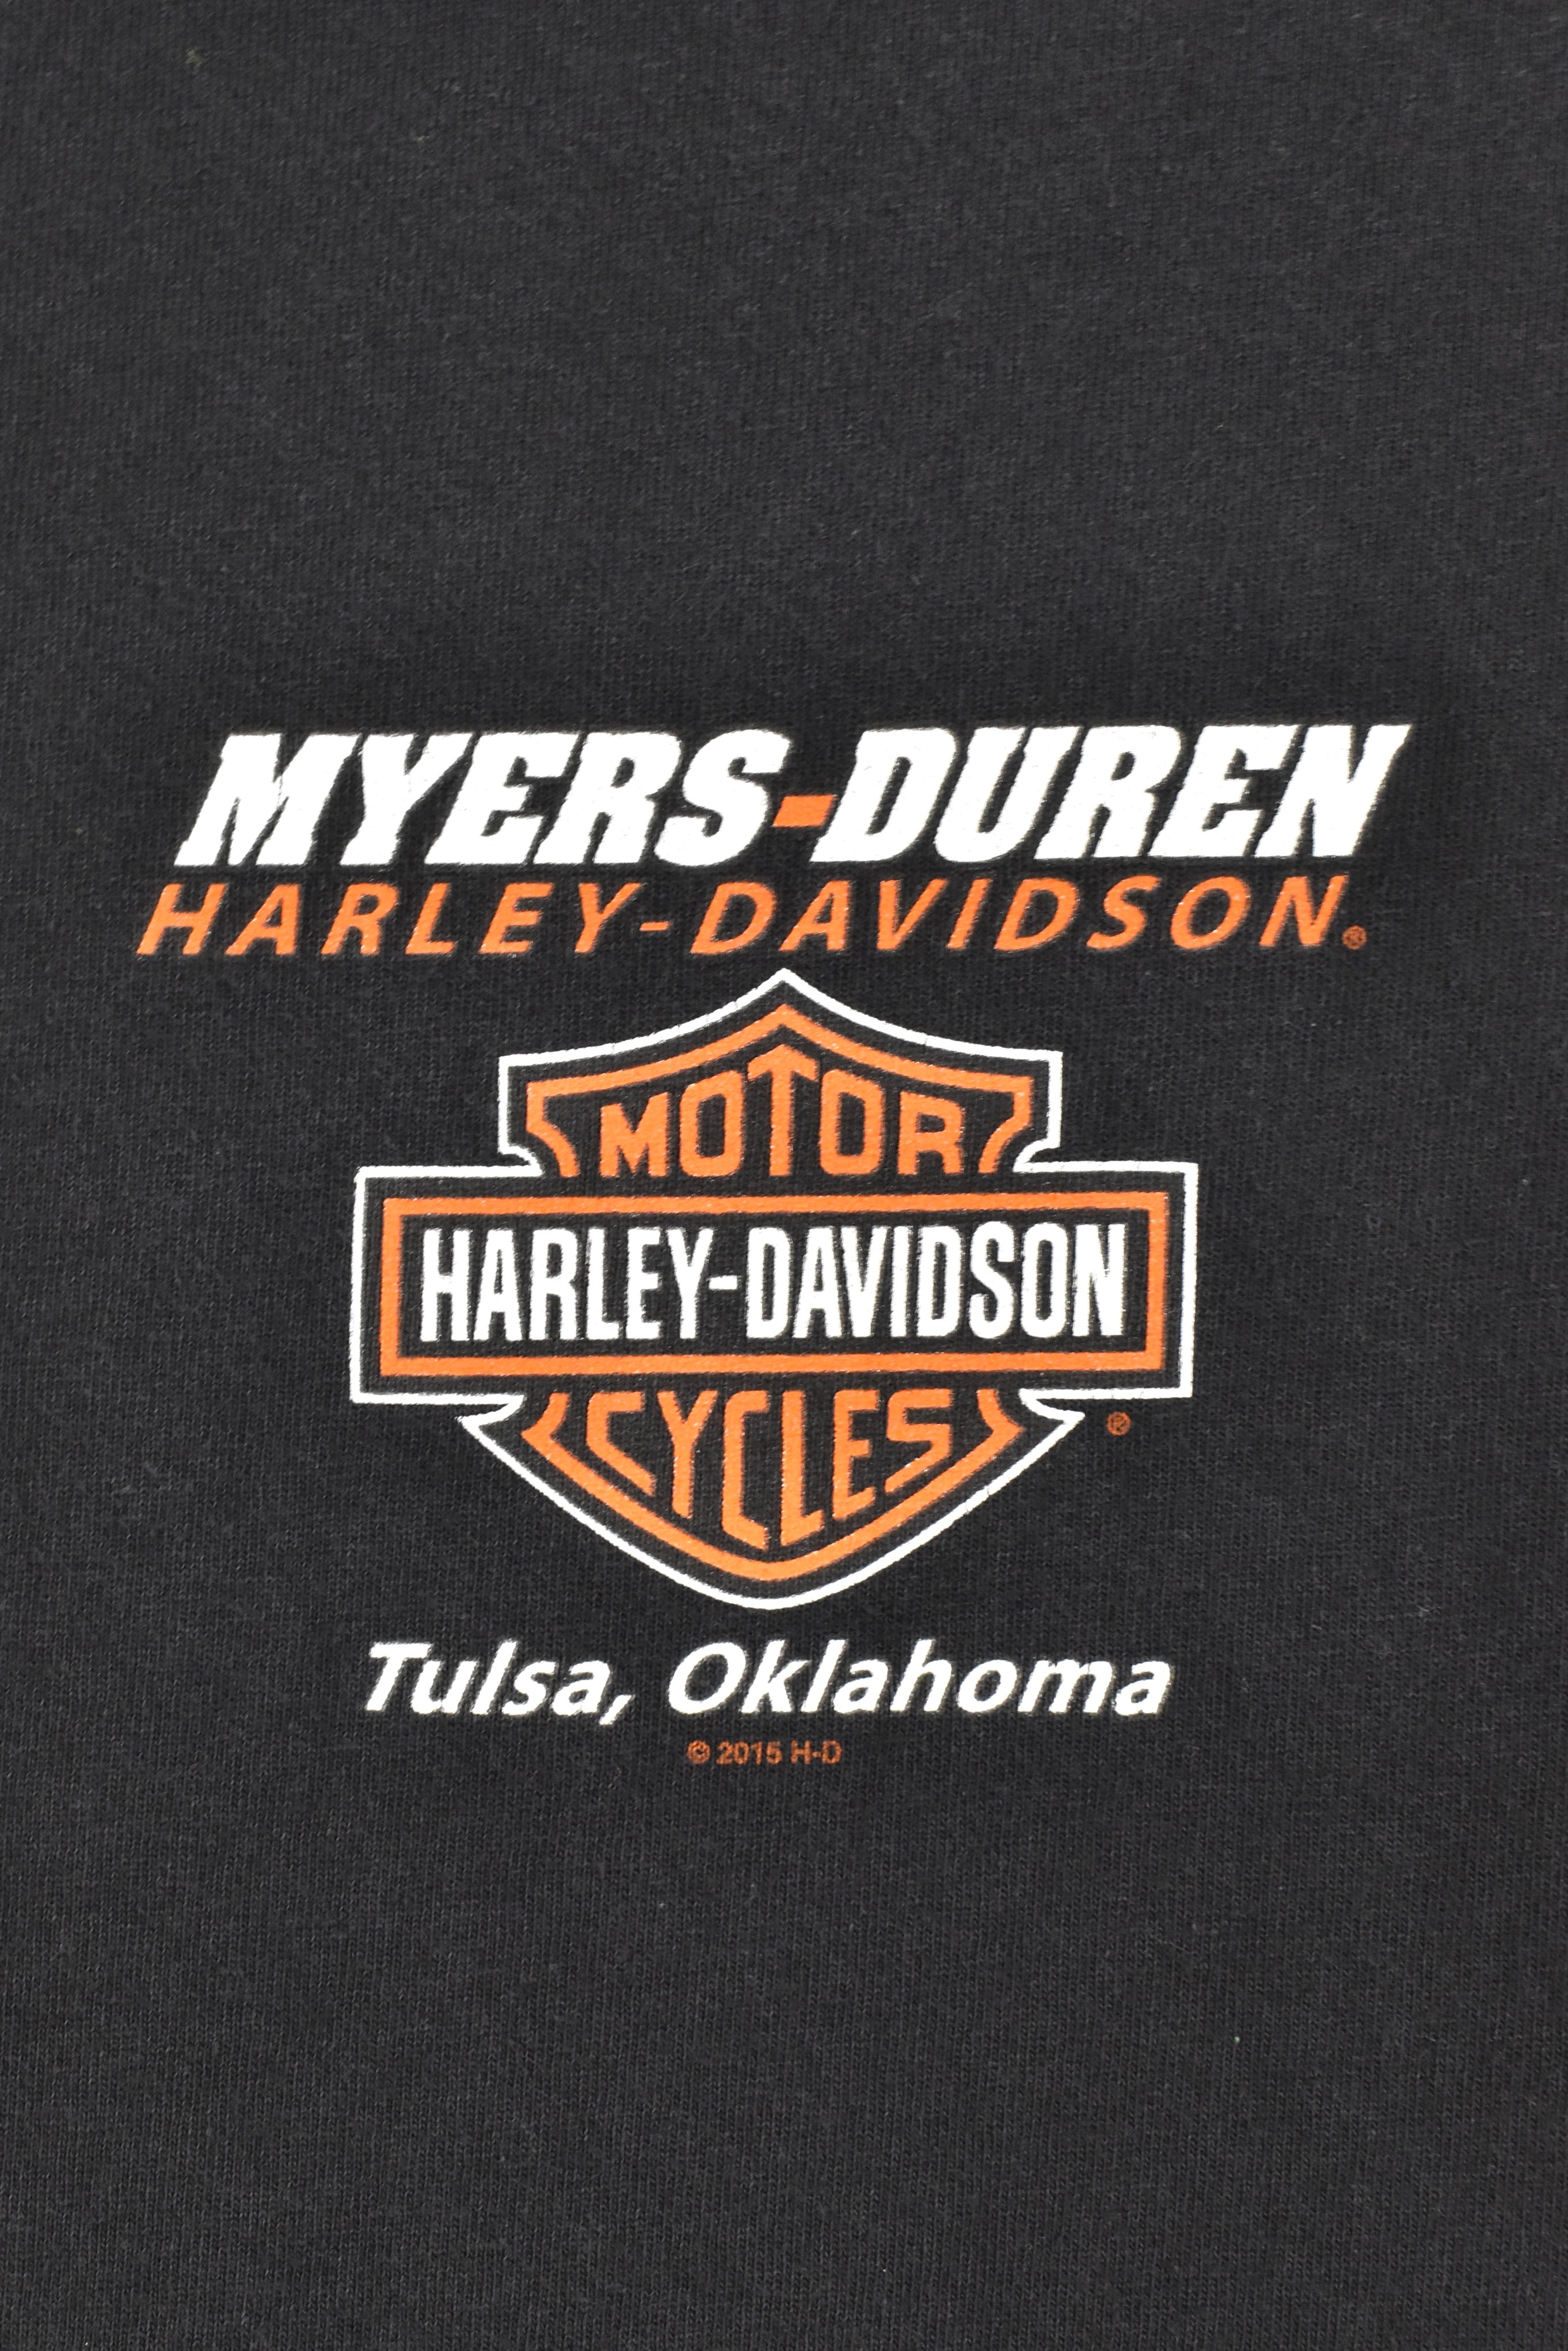 Modern Harley Davidson shirt, 2015 biker graphic tee - medium, black